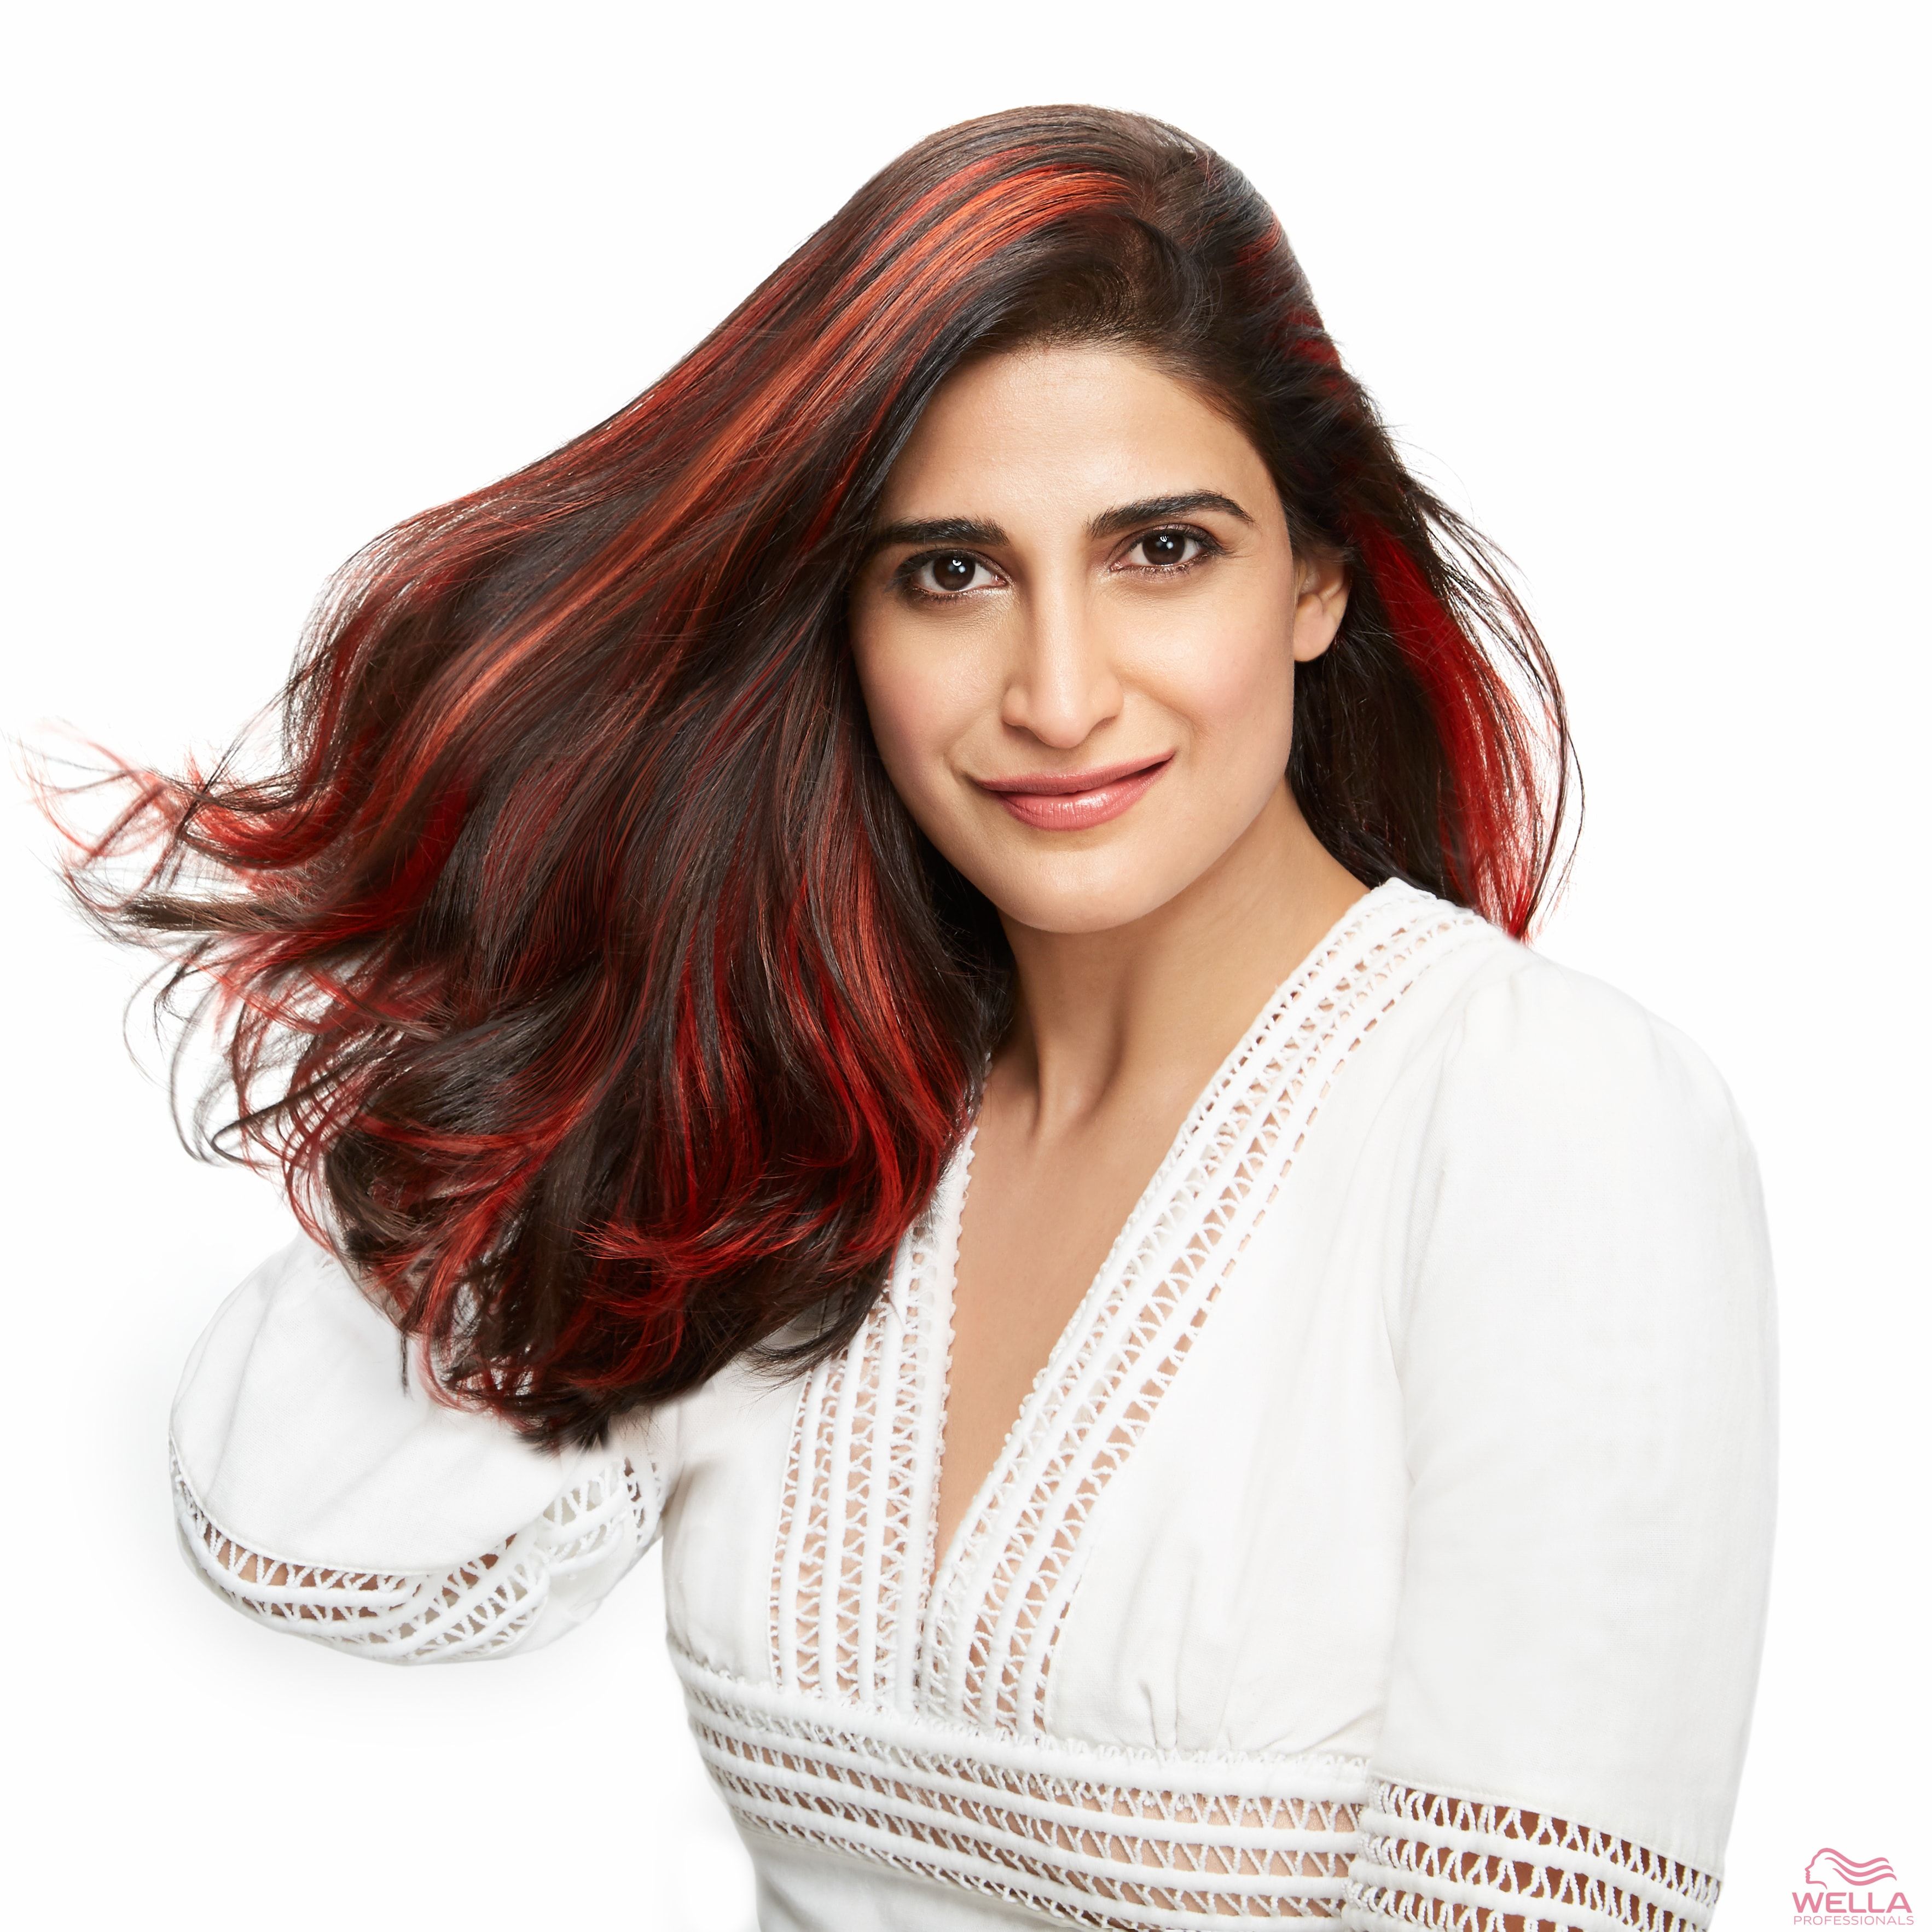 Aahana Kumra's gone red with Wella India's Color Fresh CREATE range